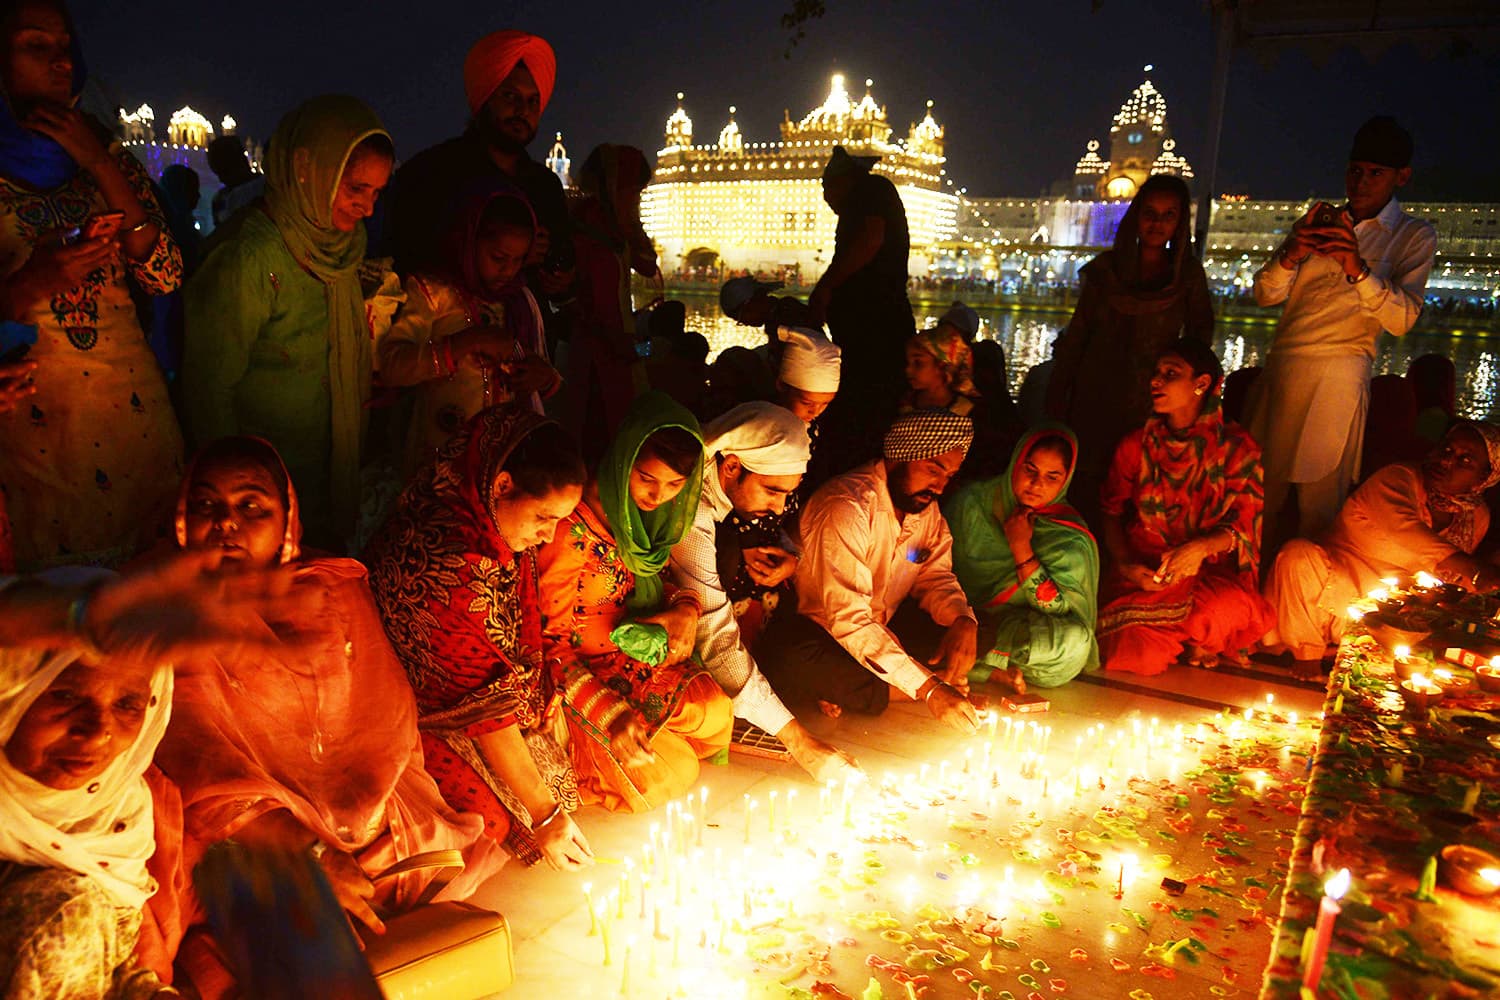 Why is the Hindu festival Diwali celebrated?